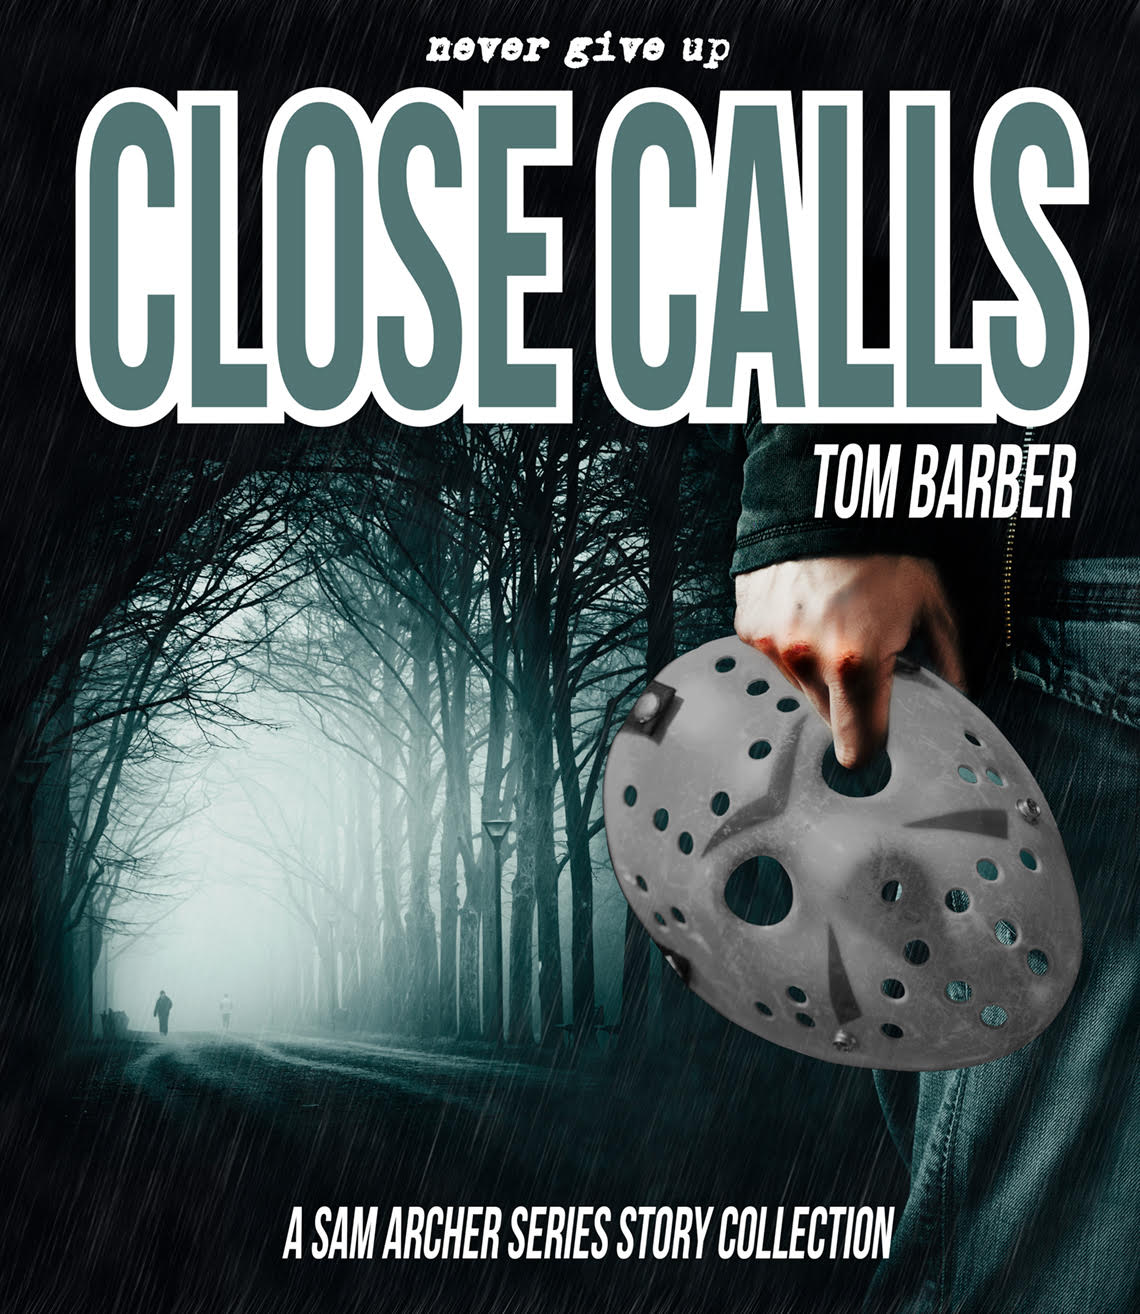 FREE: Close Calls by Tom Barber